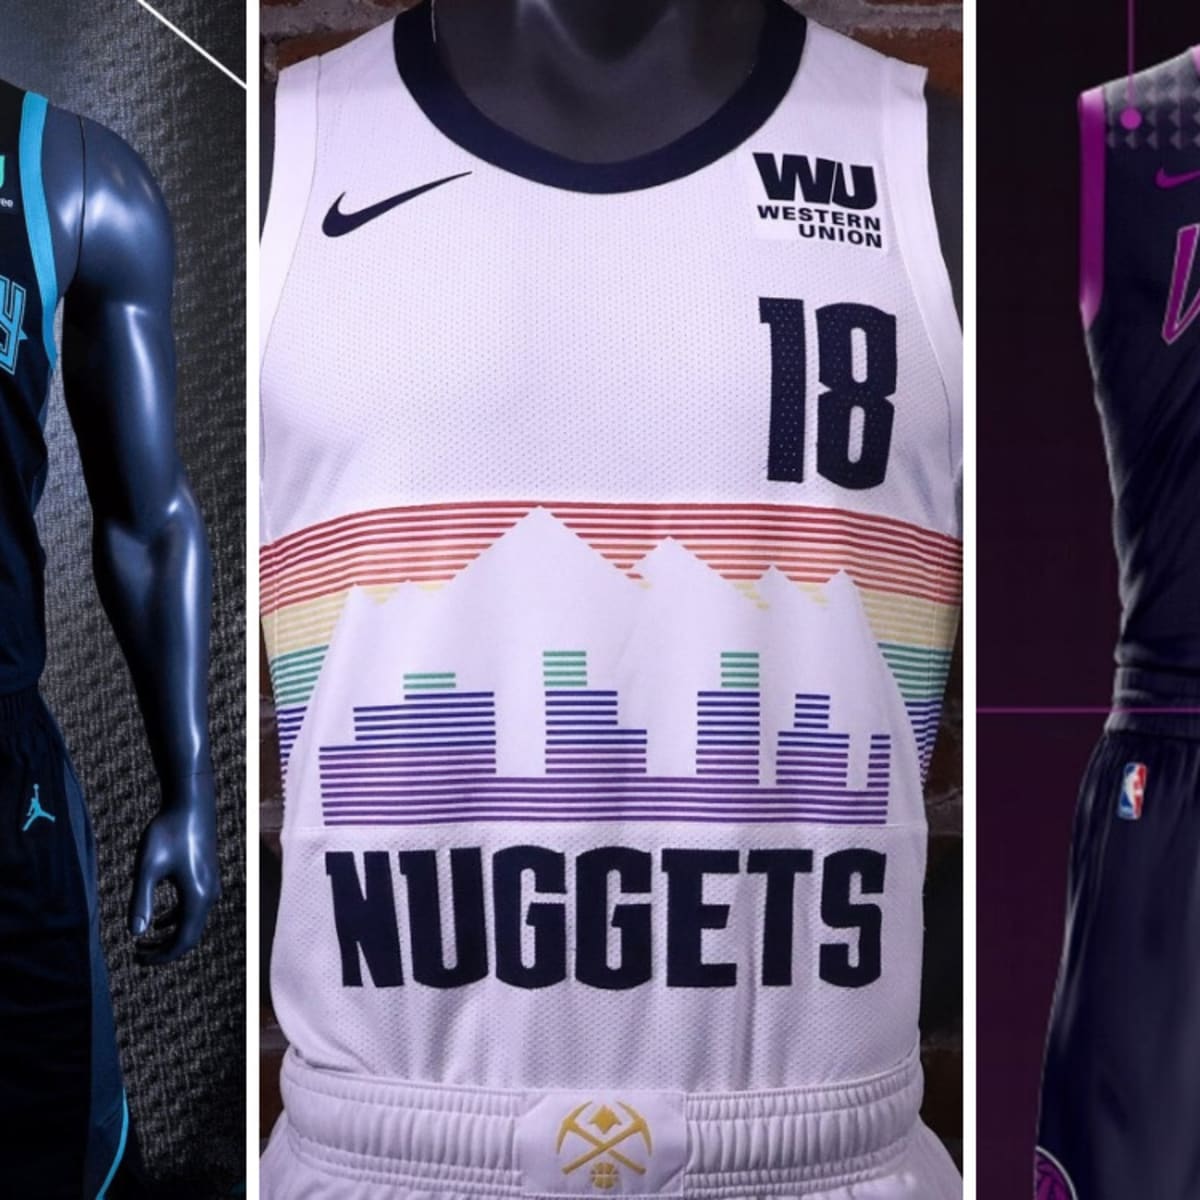 Ranking all 30 NBA City edition uniforms of the 2018-19 season